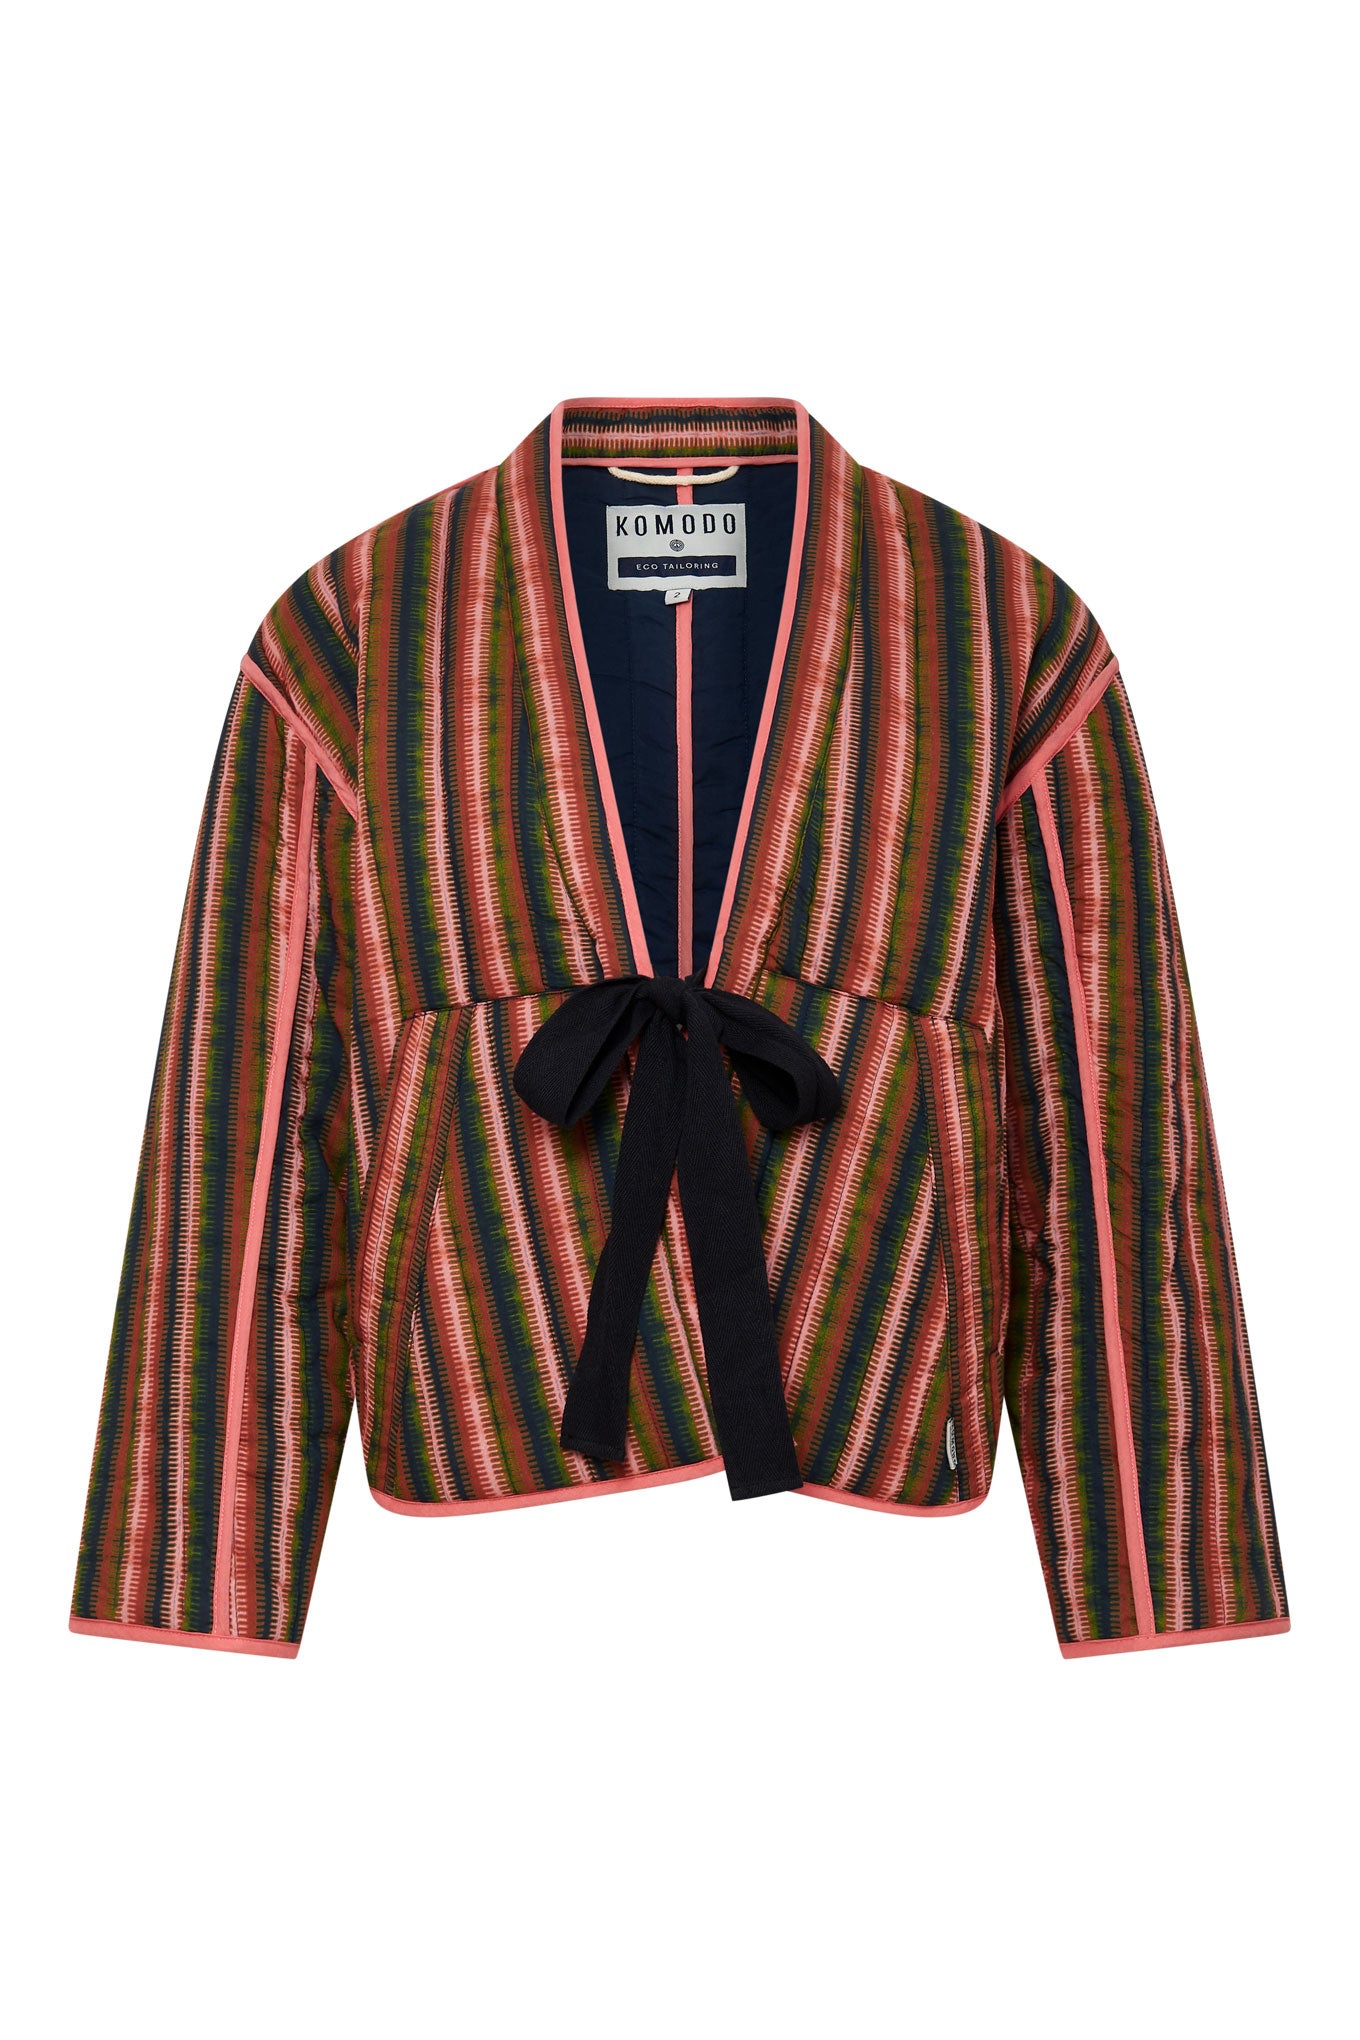 Shop Komodo Women's Weave - Organic Cotton Jacket Green Weave Stripe